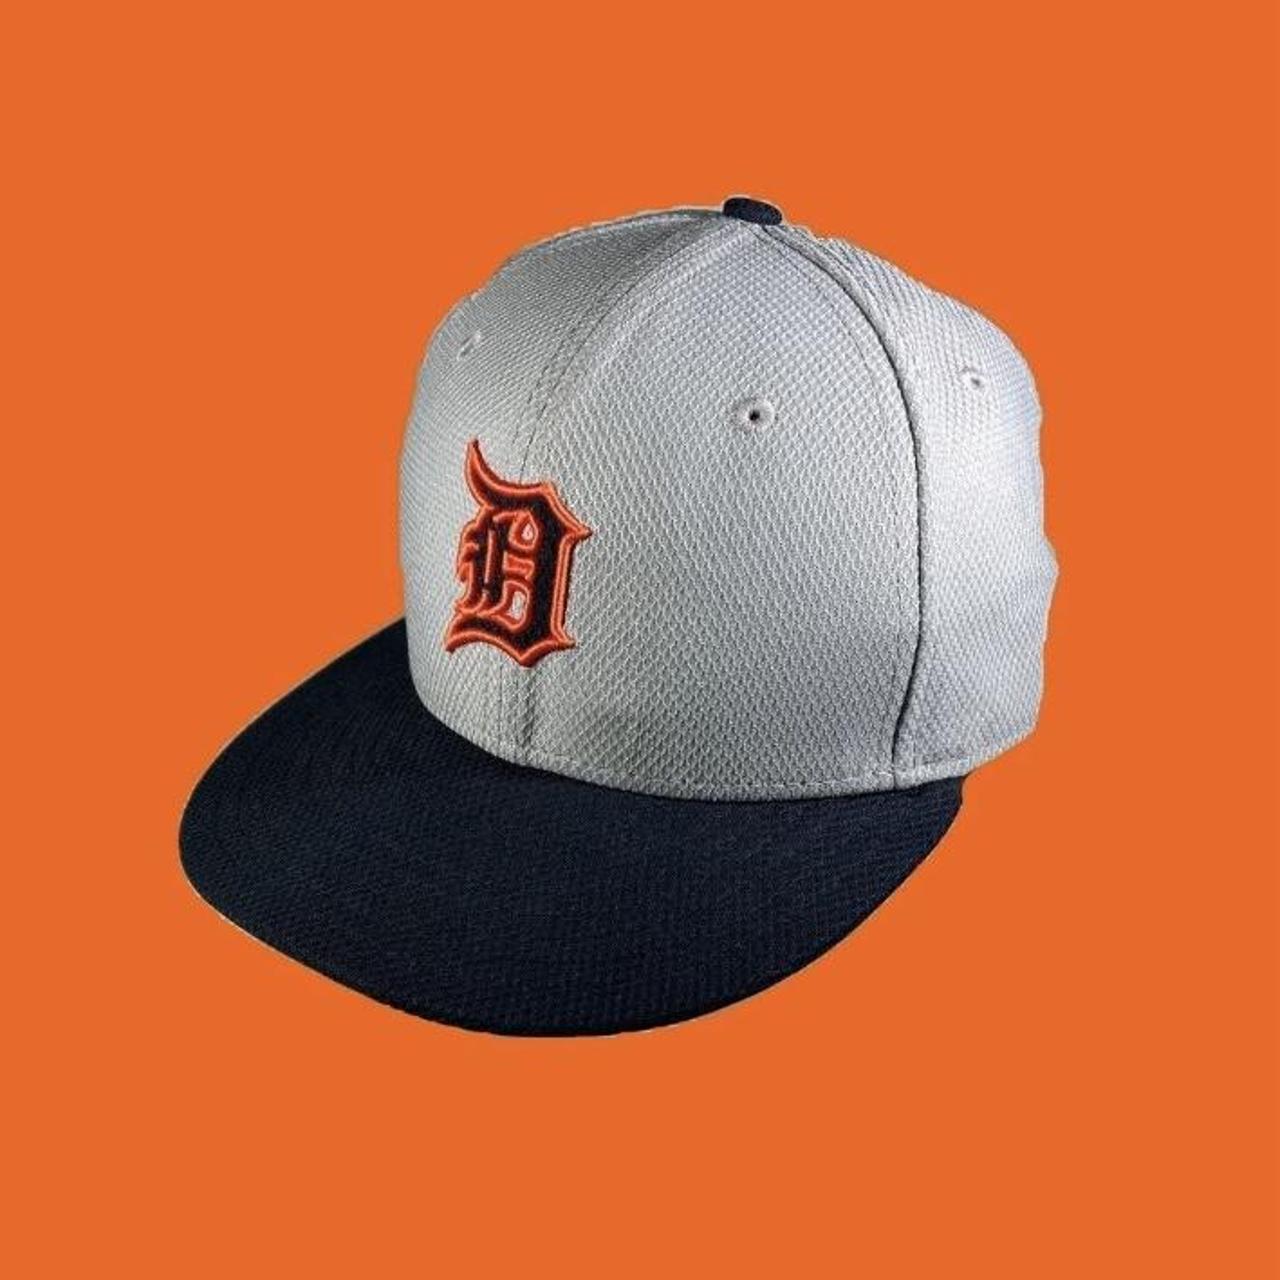 Detroit tigers hat club fitted 7 5/8 #detroit - Depop